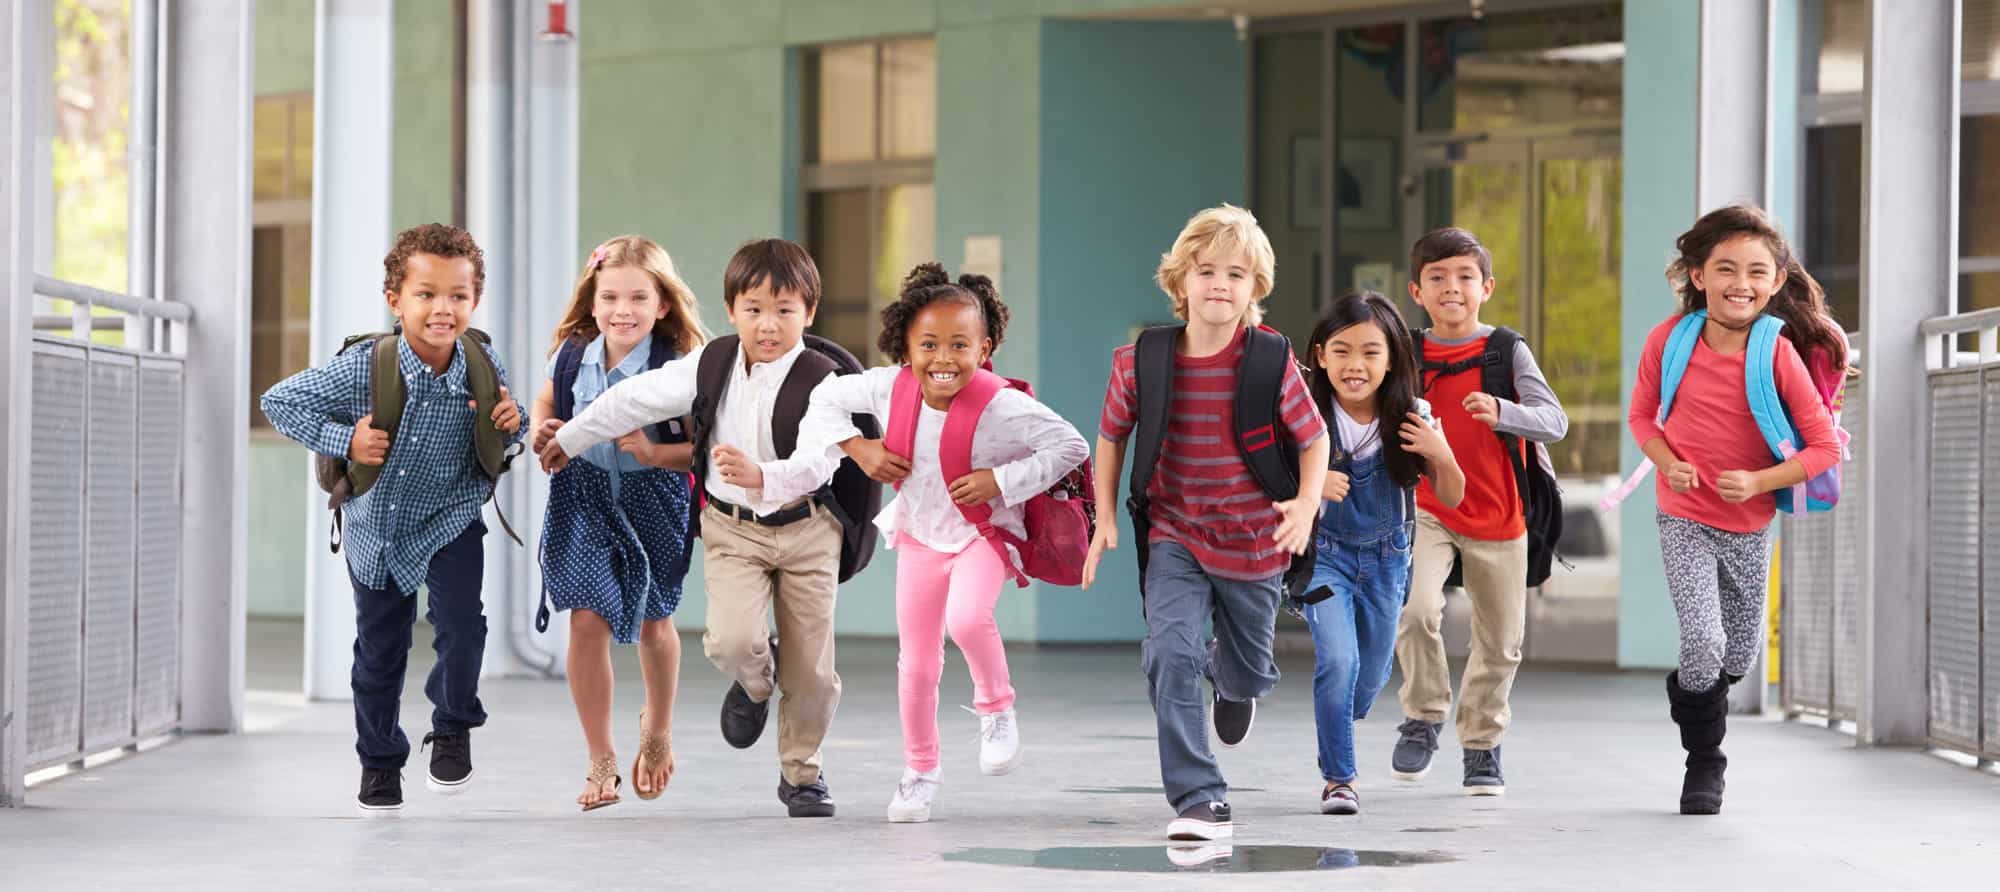 Primary school children running in the hallways at hometime holding hands